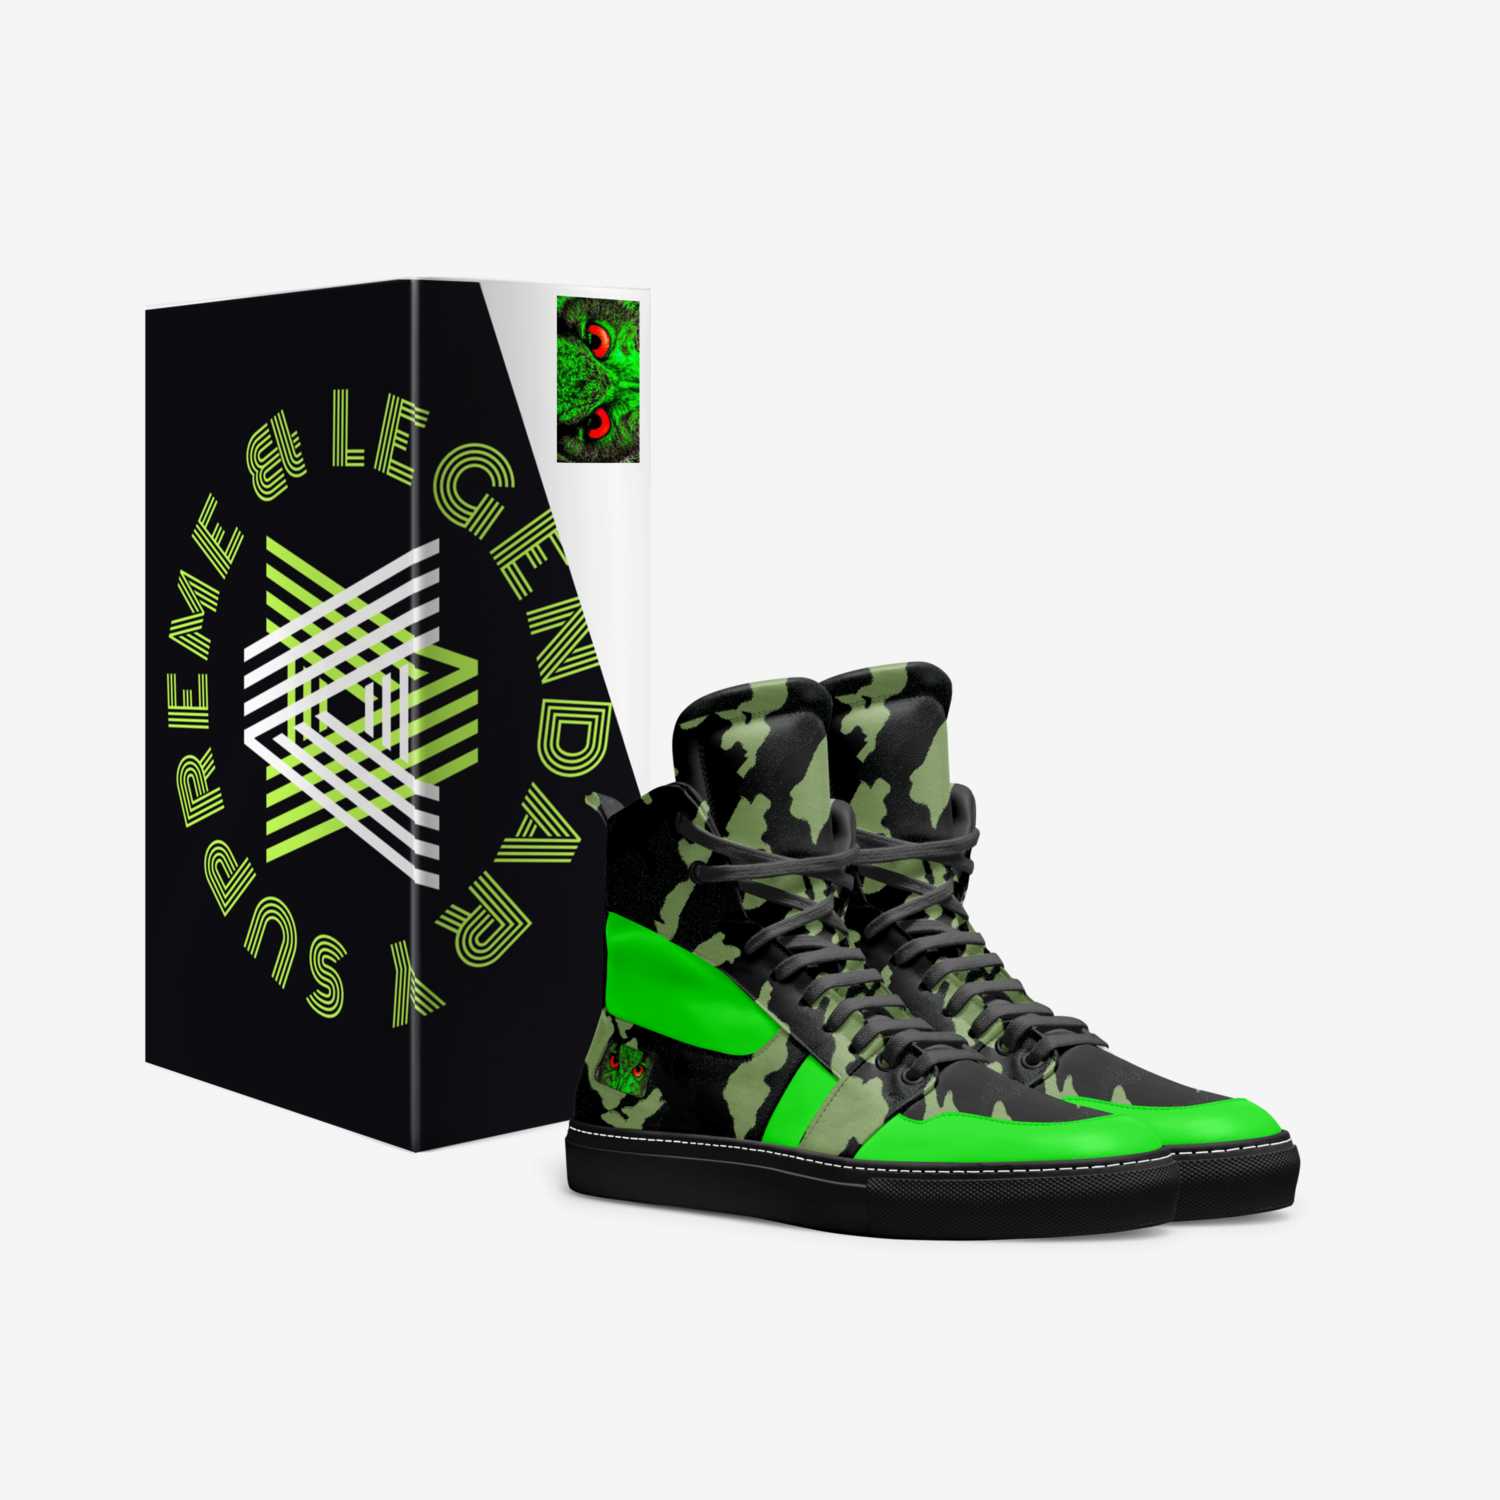 Evil Genius custom made in Italy shoes by Akini Furlonge | Box view